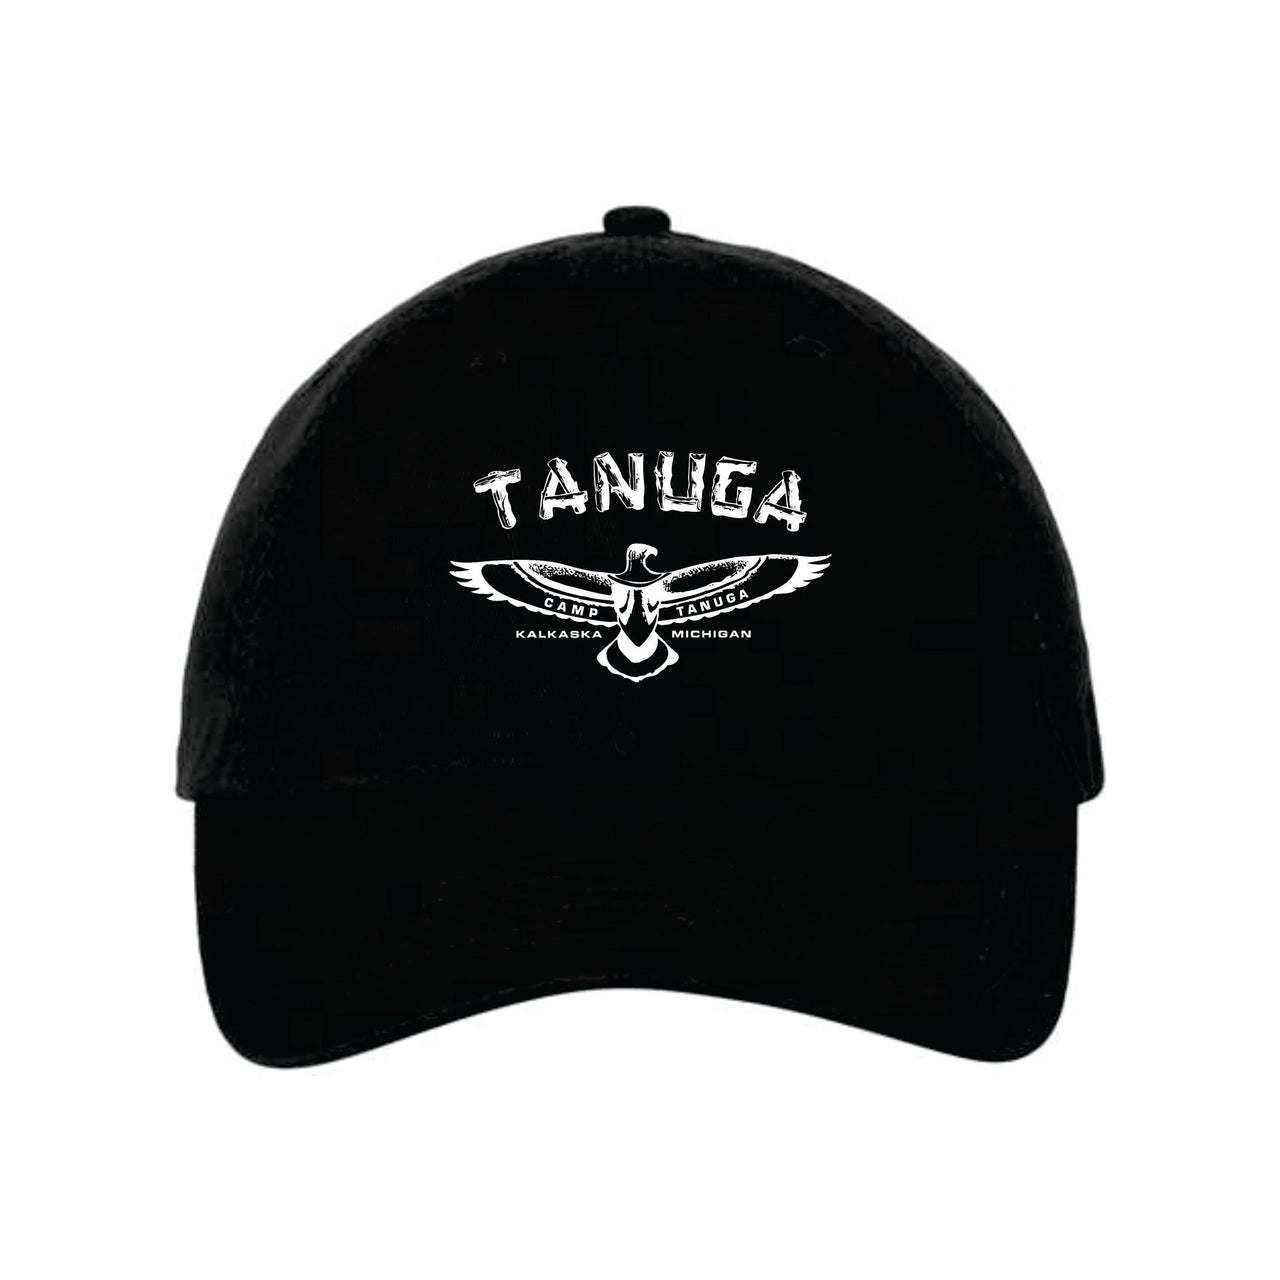 Tanuga Black Embroidered Hat